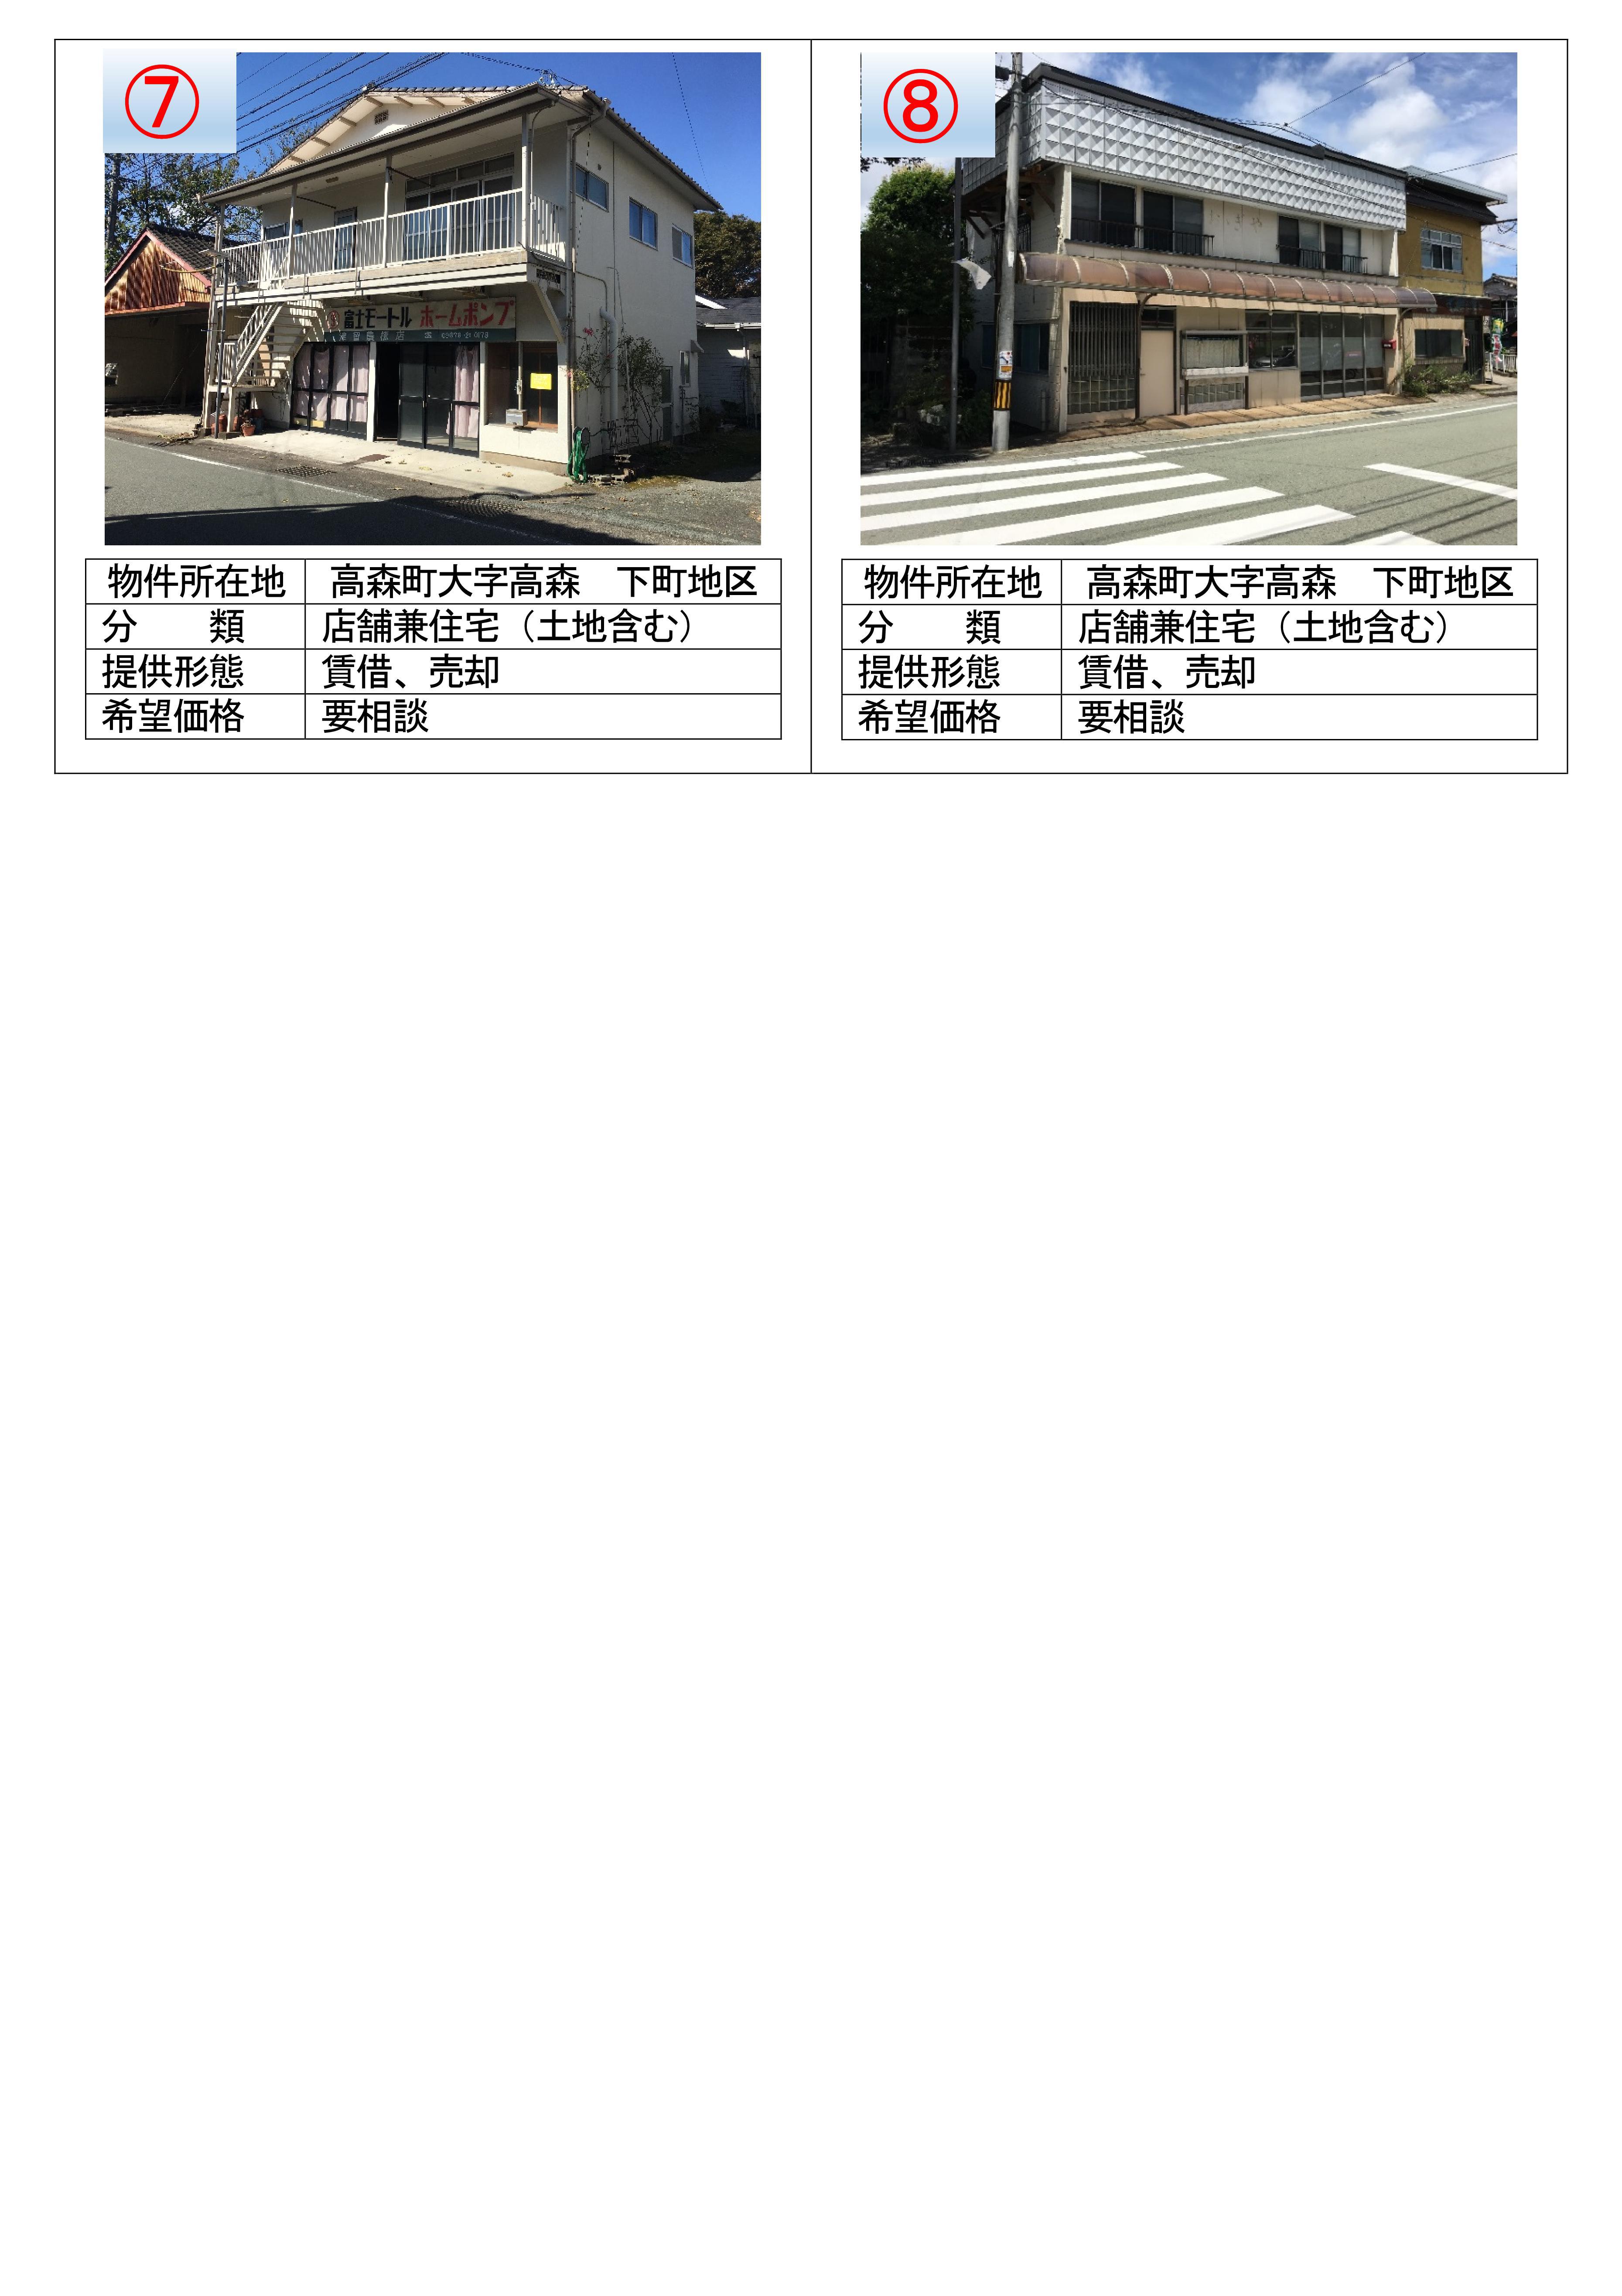 http://www.town.takamori.kumamoto.jp/chosha/seisaku/upload/06cf8a4ddbce36982d417fe921ff272ba517a397.jpg